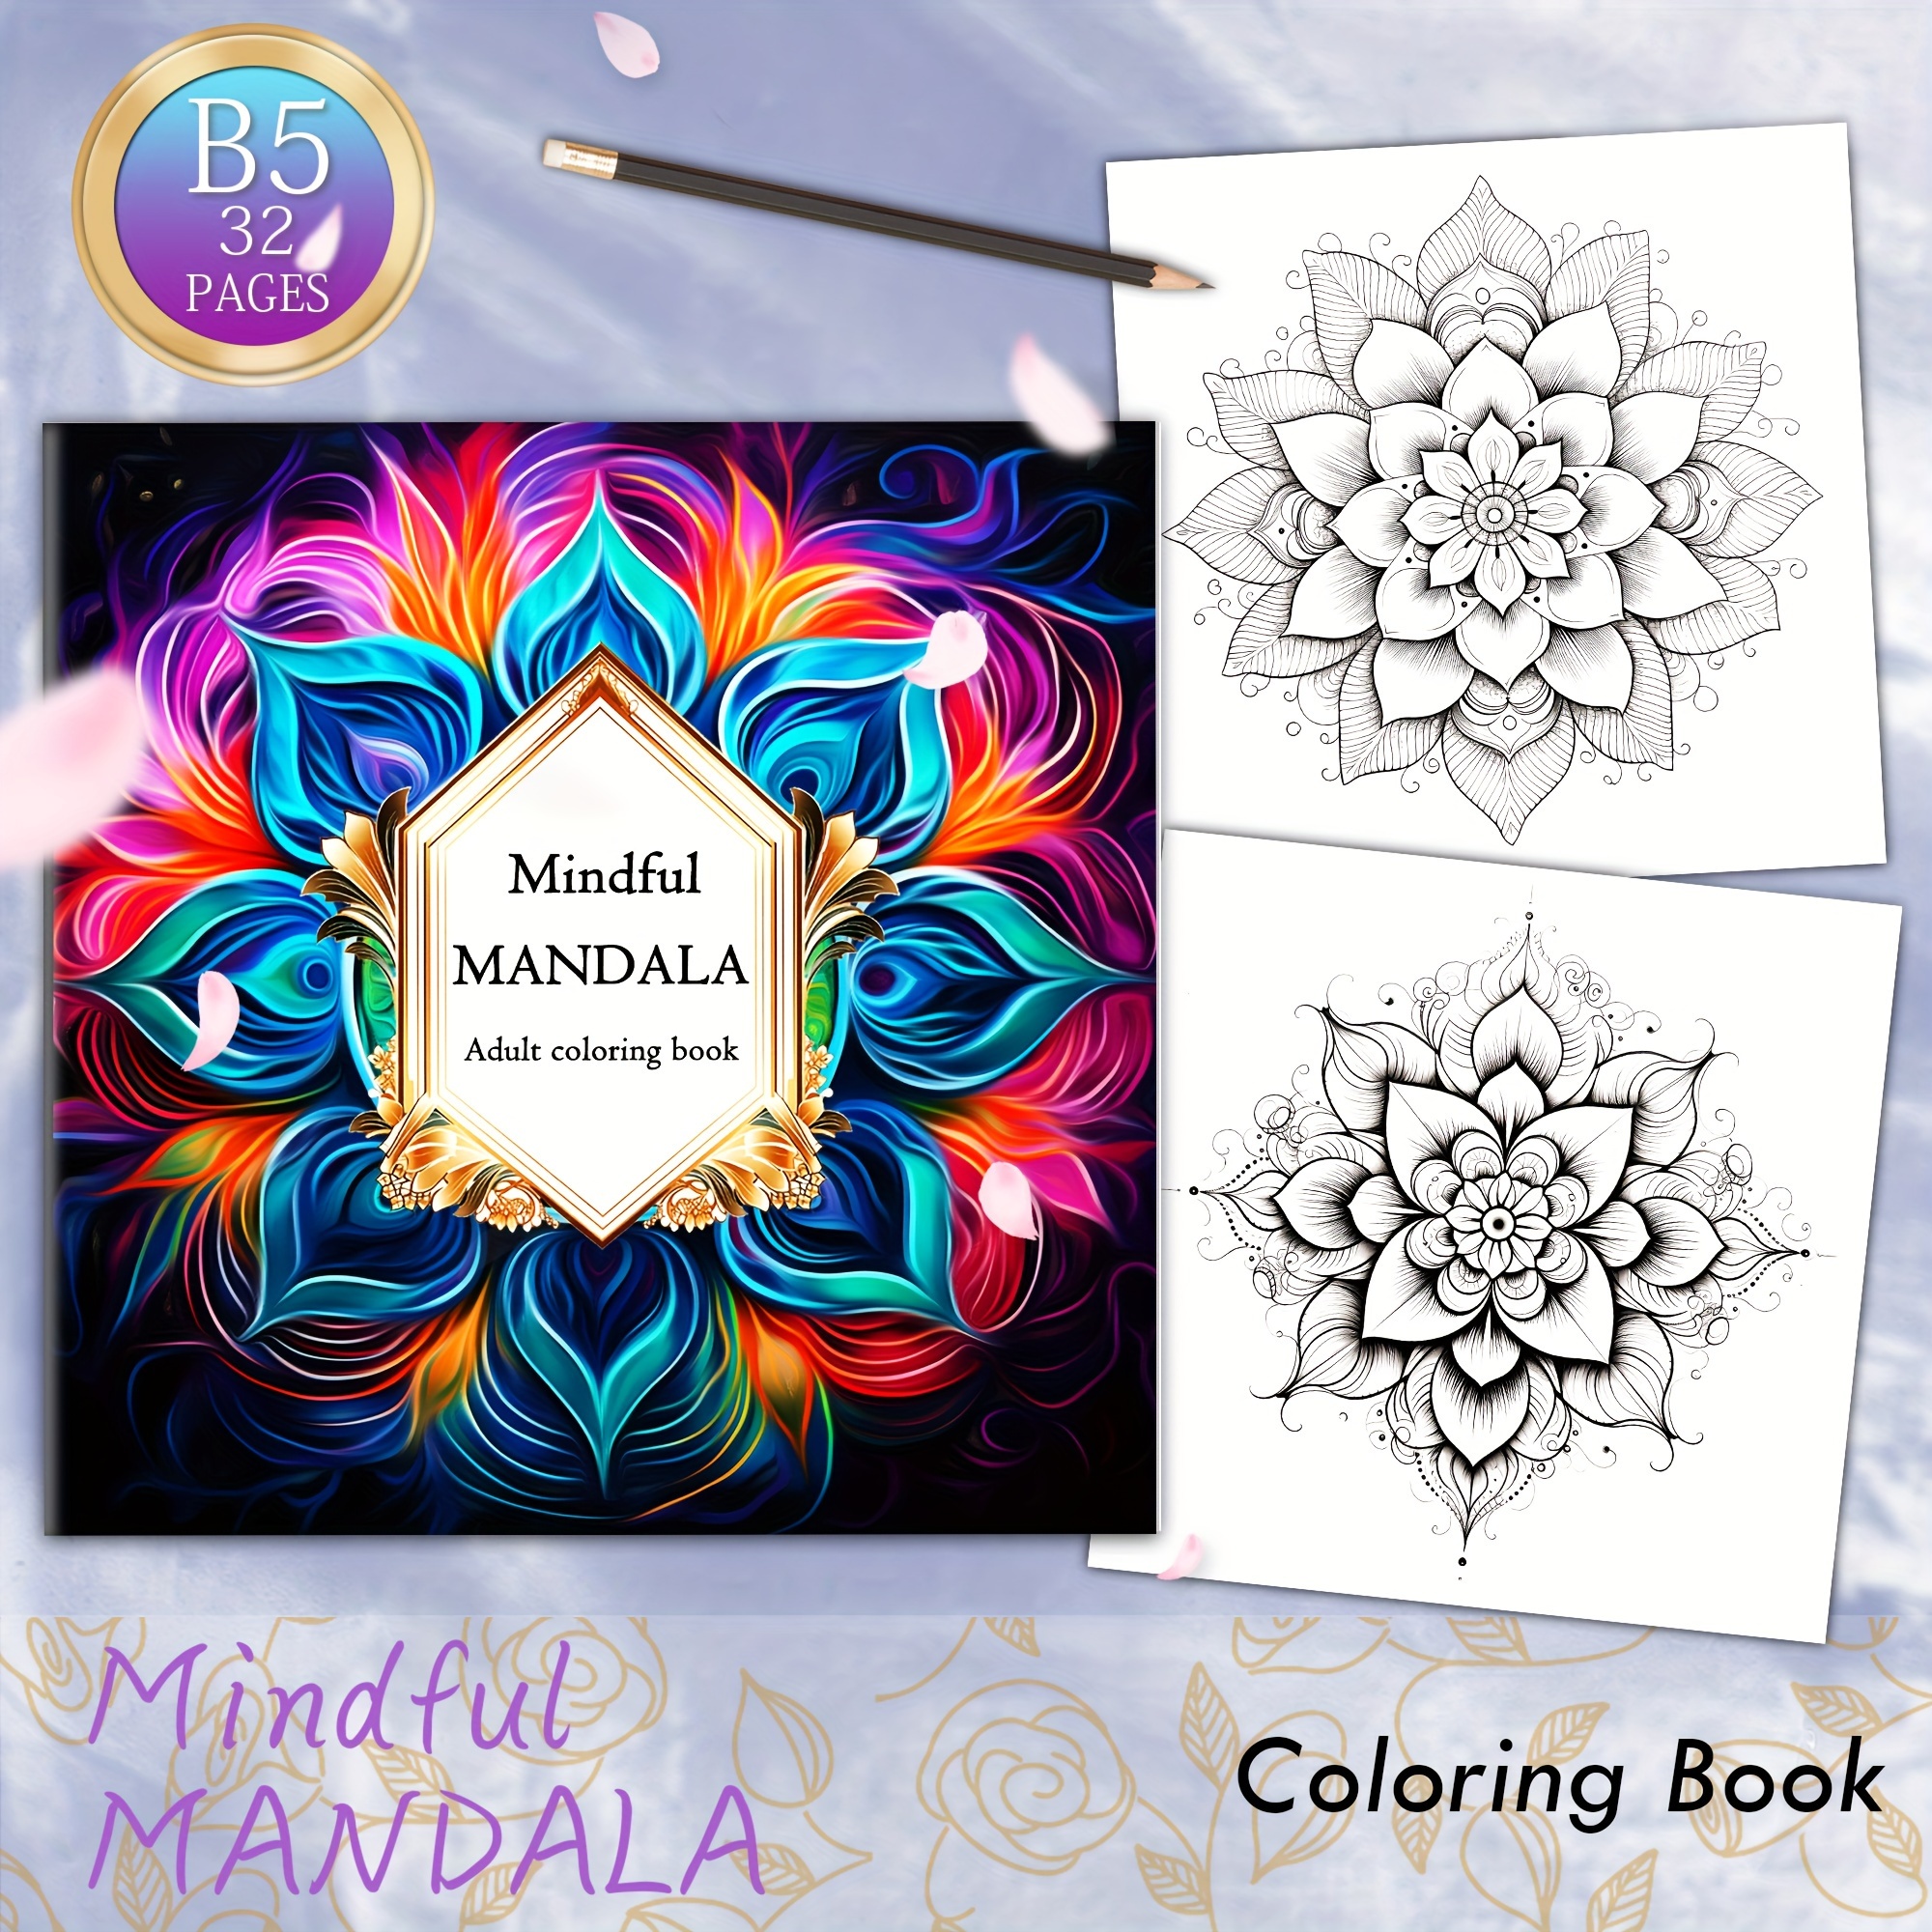 Pocket Mandalas: A Travel Size Mini Adult Coloring Book [Book]